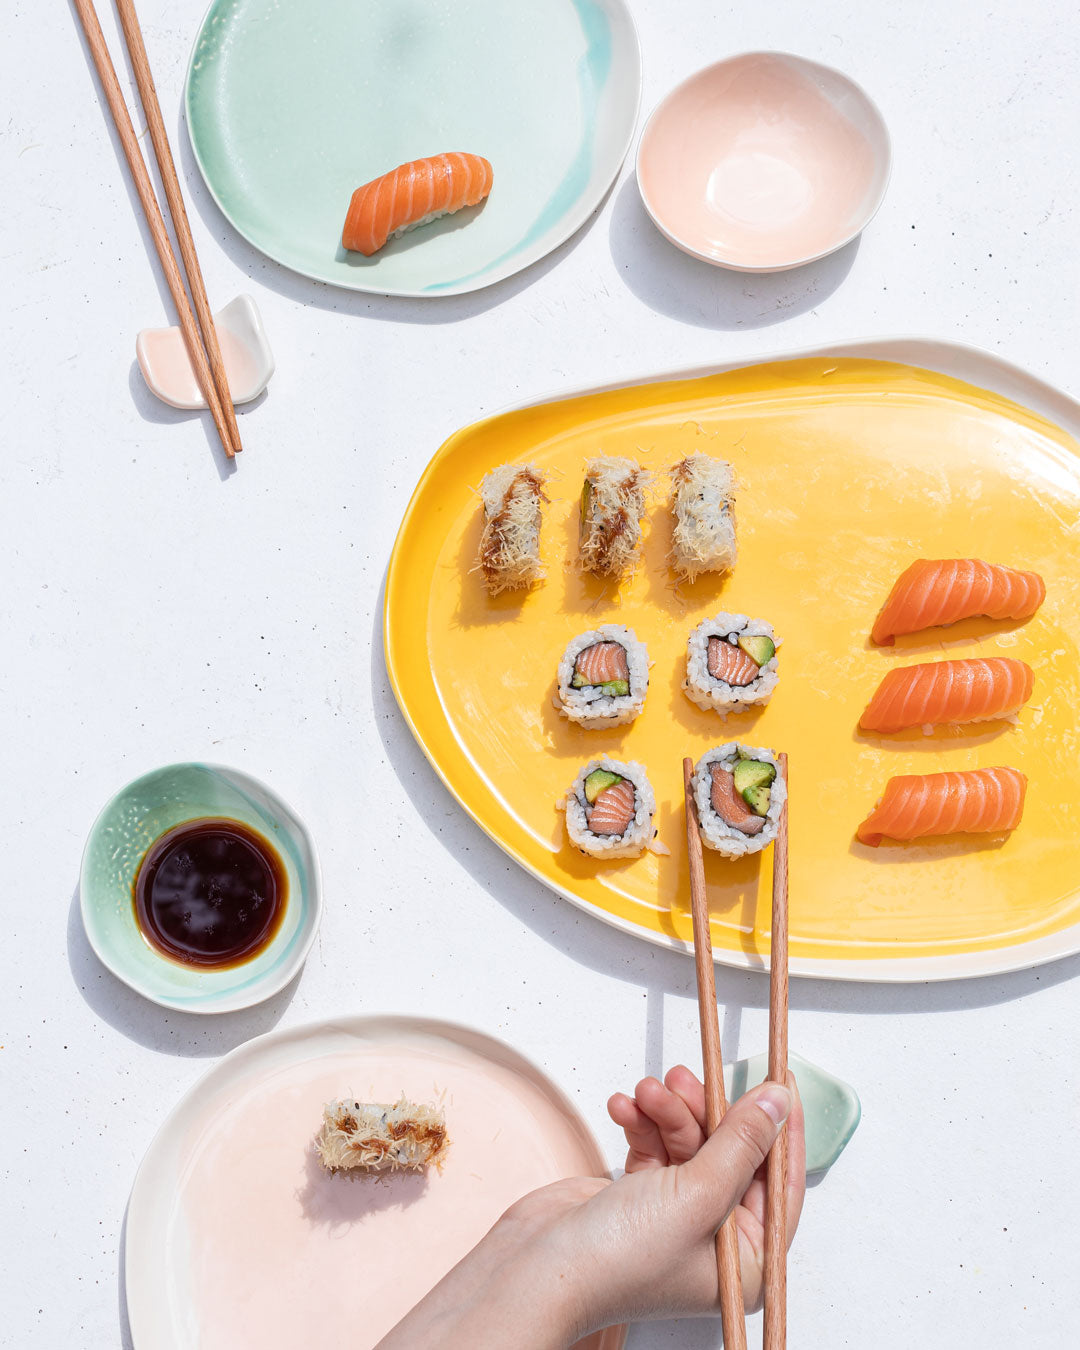 Sushi set - 2 people